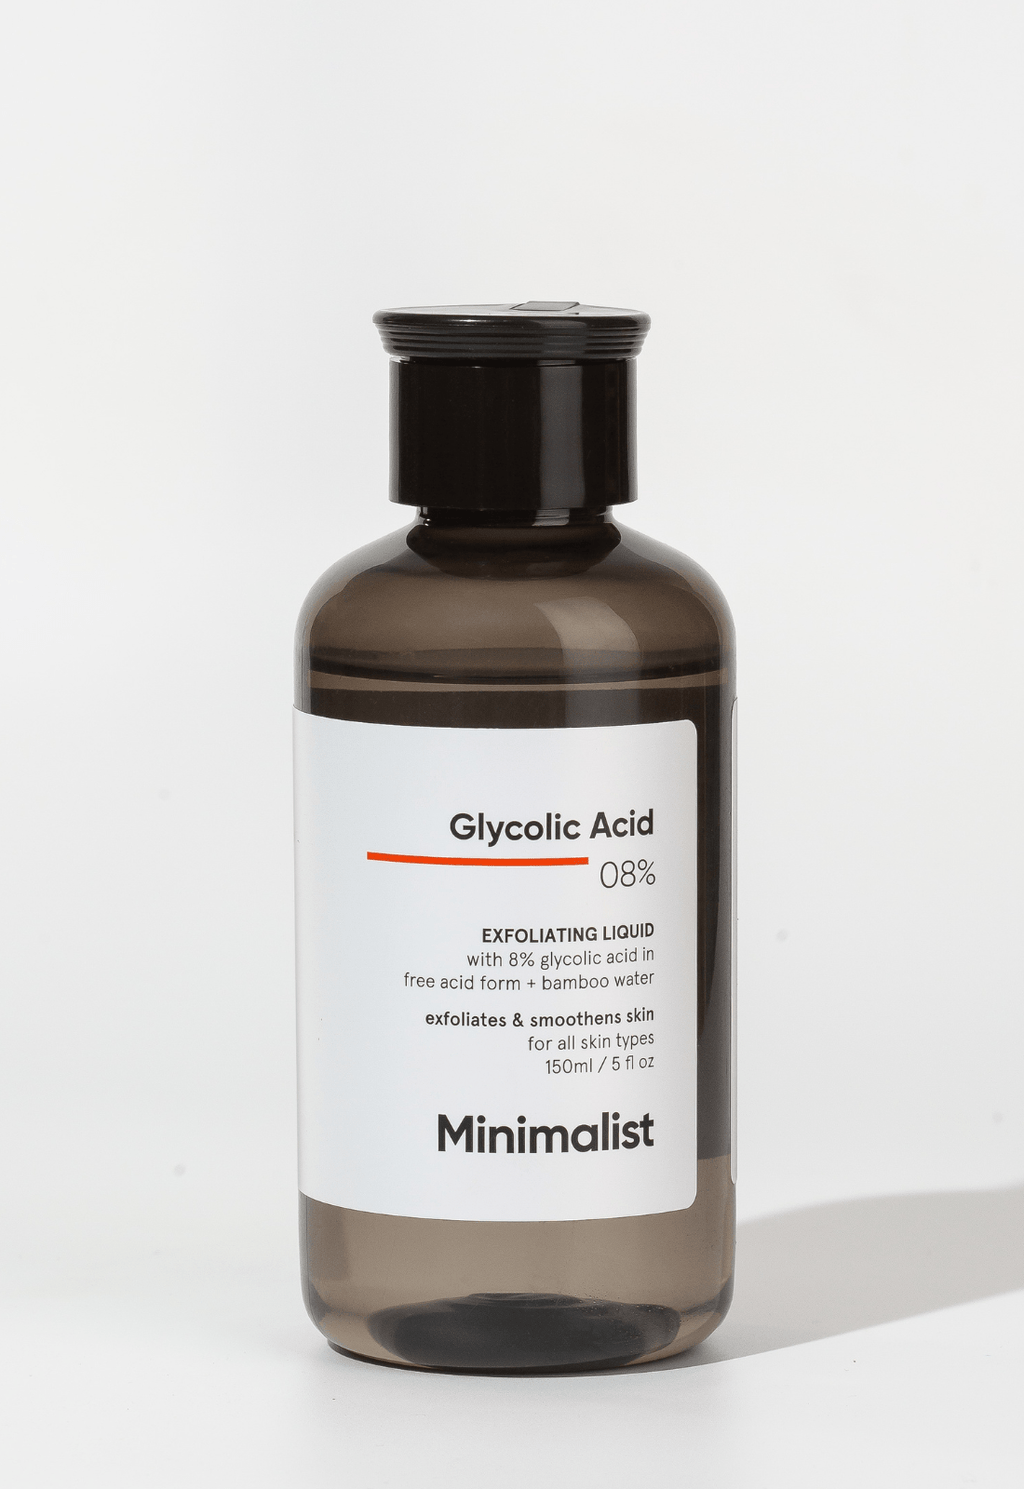 Glycolic Acid 08% Liquid for Exfoliating & Smooth Skin - Toner for All Skin Types | Minimalist